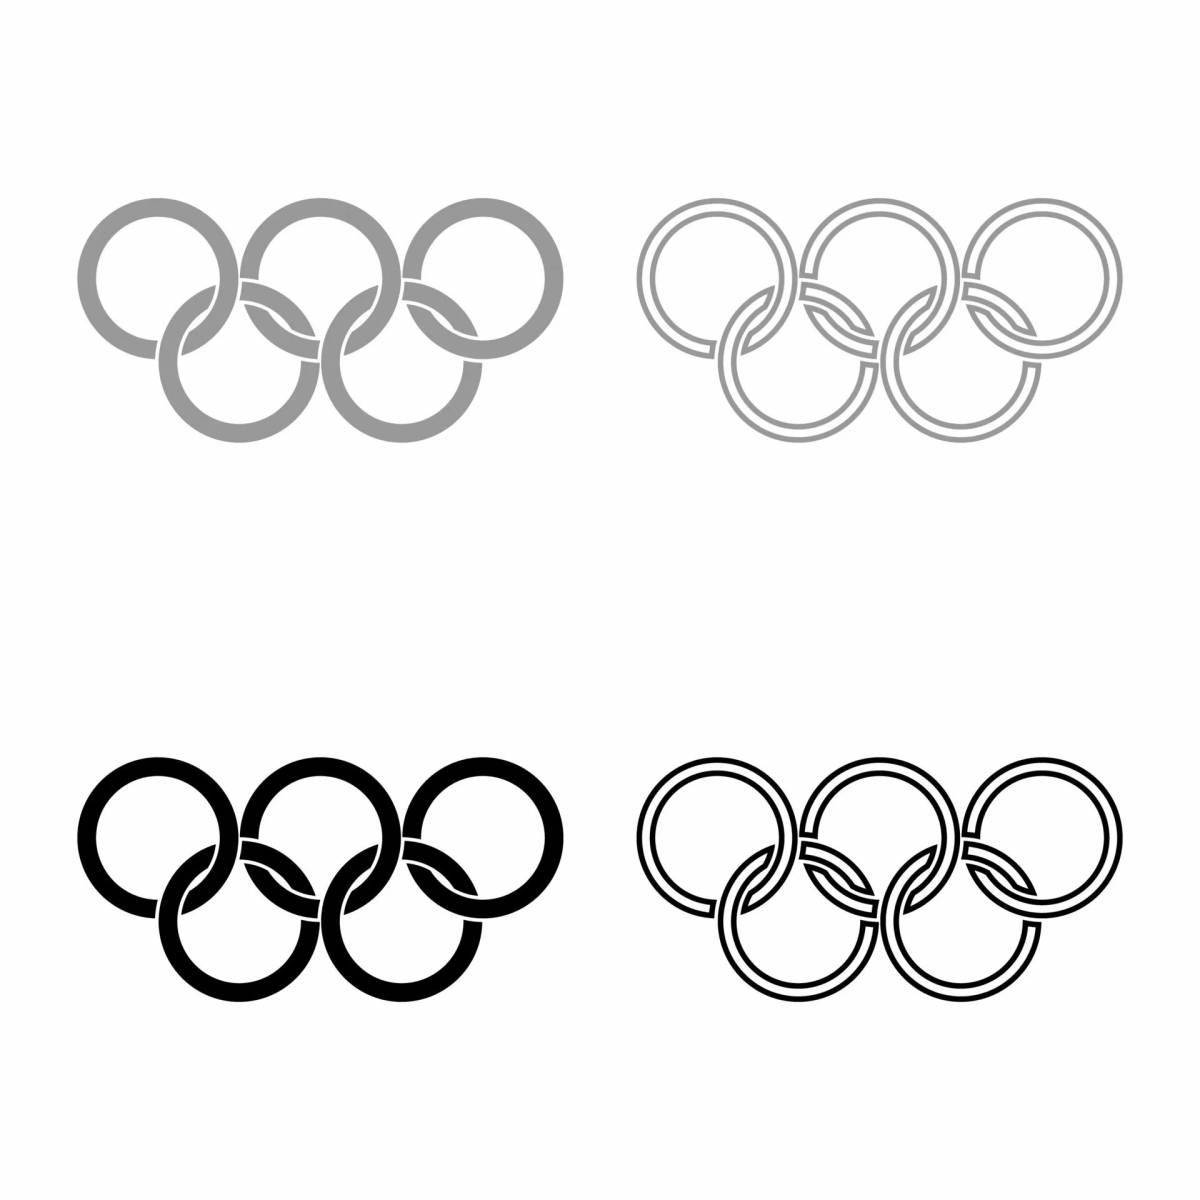 Креативная раскраска олимпийских колец для детей